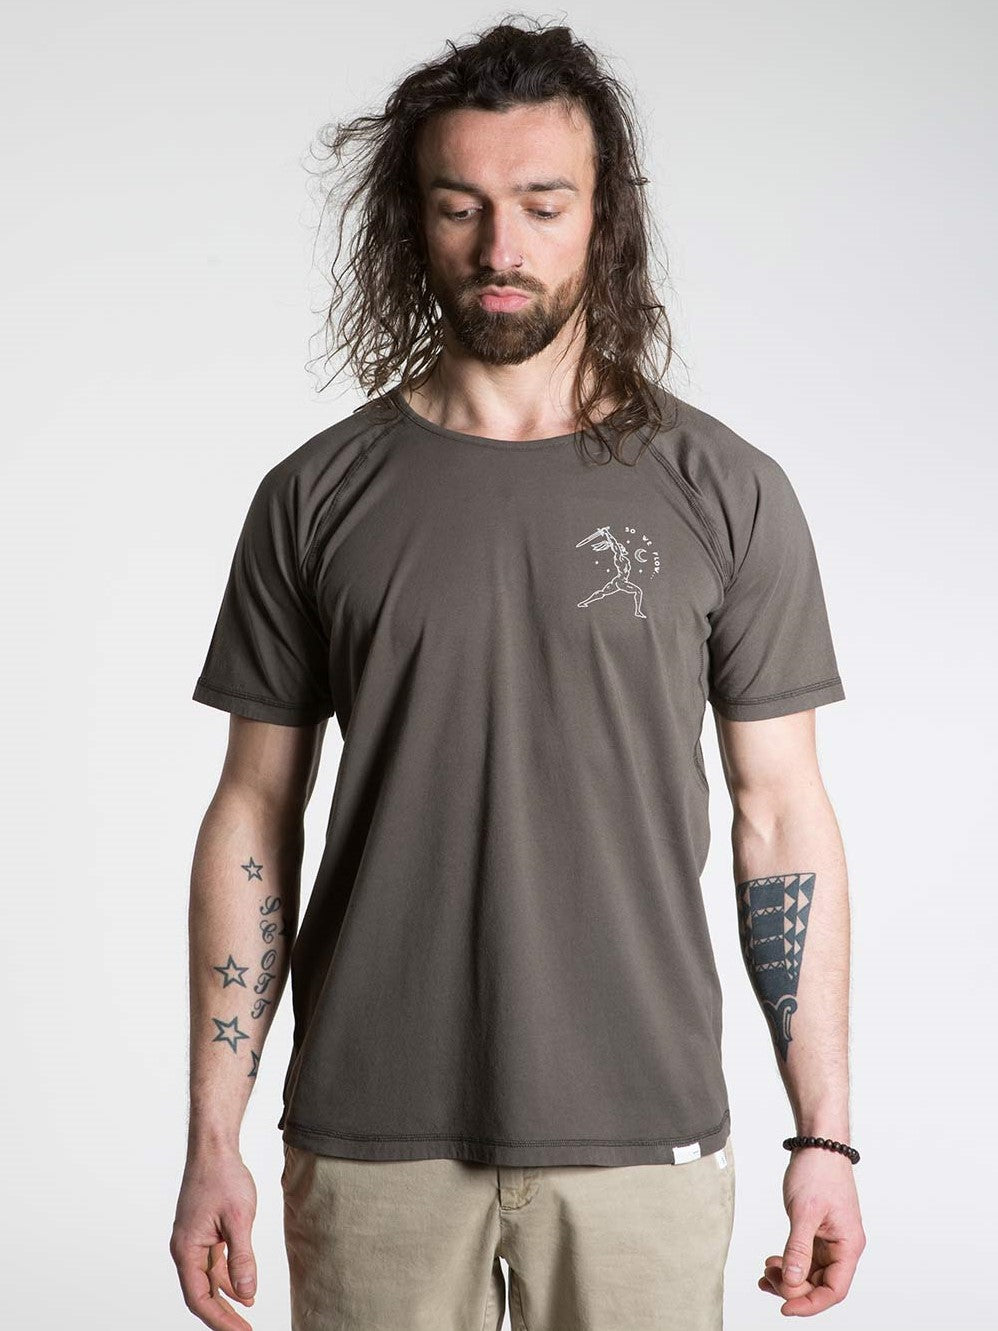 SO WE FLOW... soweflow... Short Sleeve Top Men's Yoga Tee Warrior T-Shirt Grit Brown - Activemen Clothing